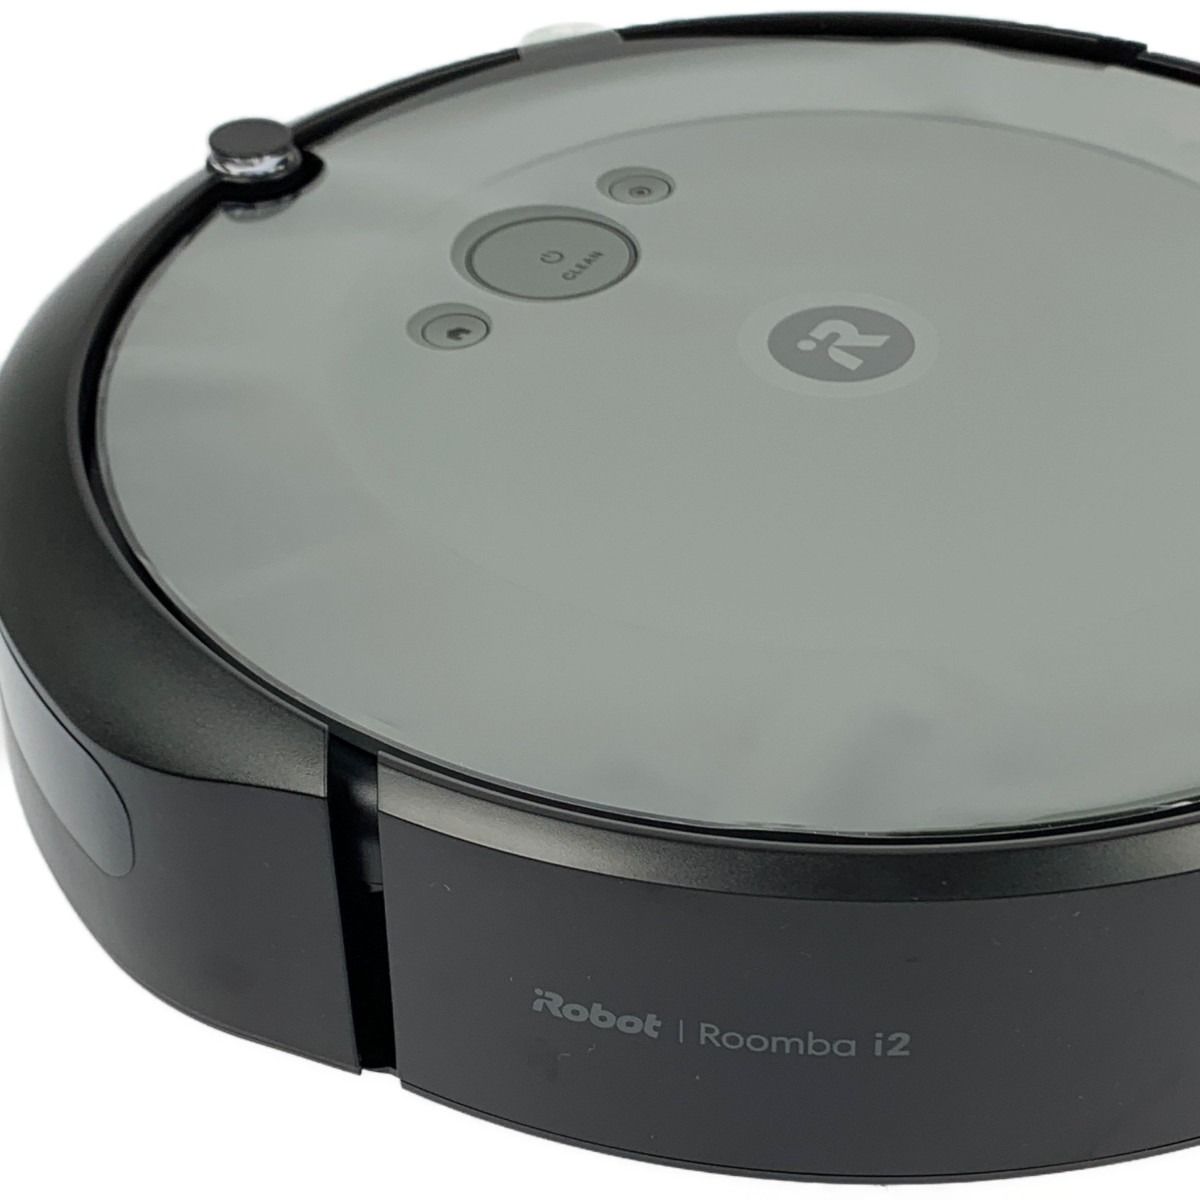 ▽▽iRobot Roomba ルンバ i2 i2158 ロボット掃除機 RVD-Y1 - メルカリ